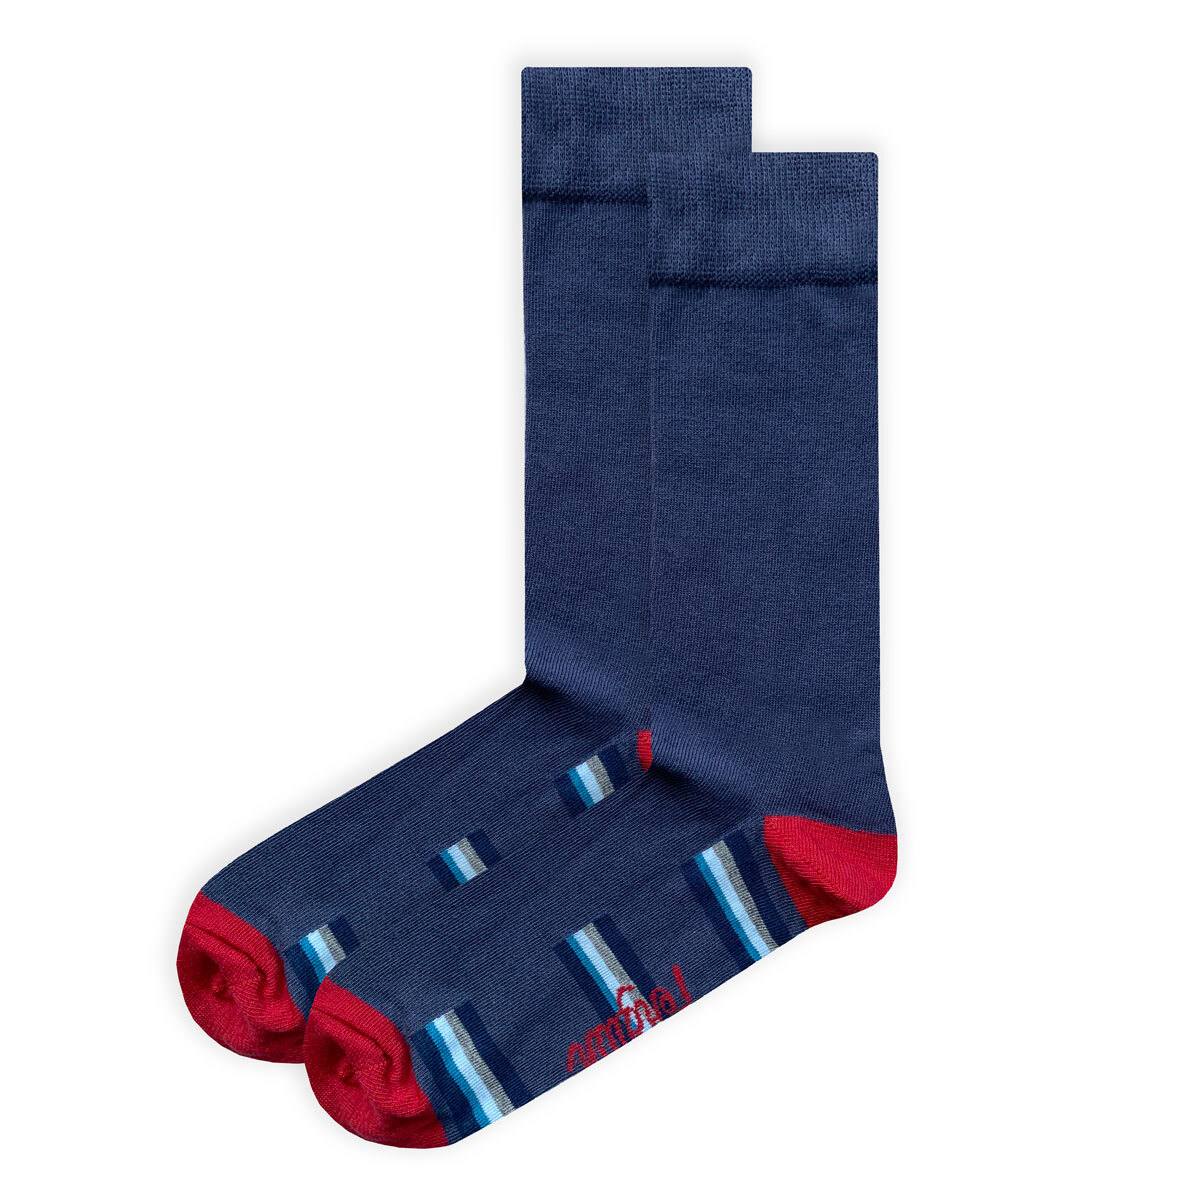 Original Penguin Men's Striped Socks, 6 Pack in Teal, Navy and Red